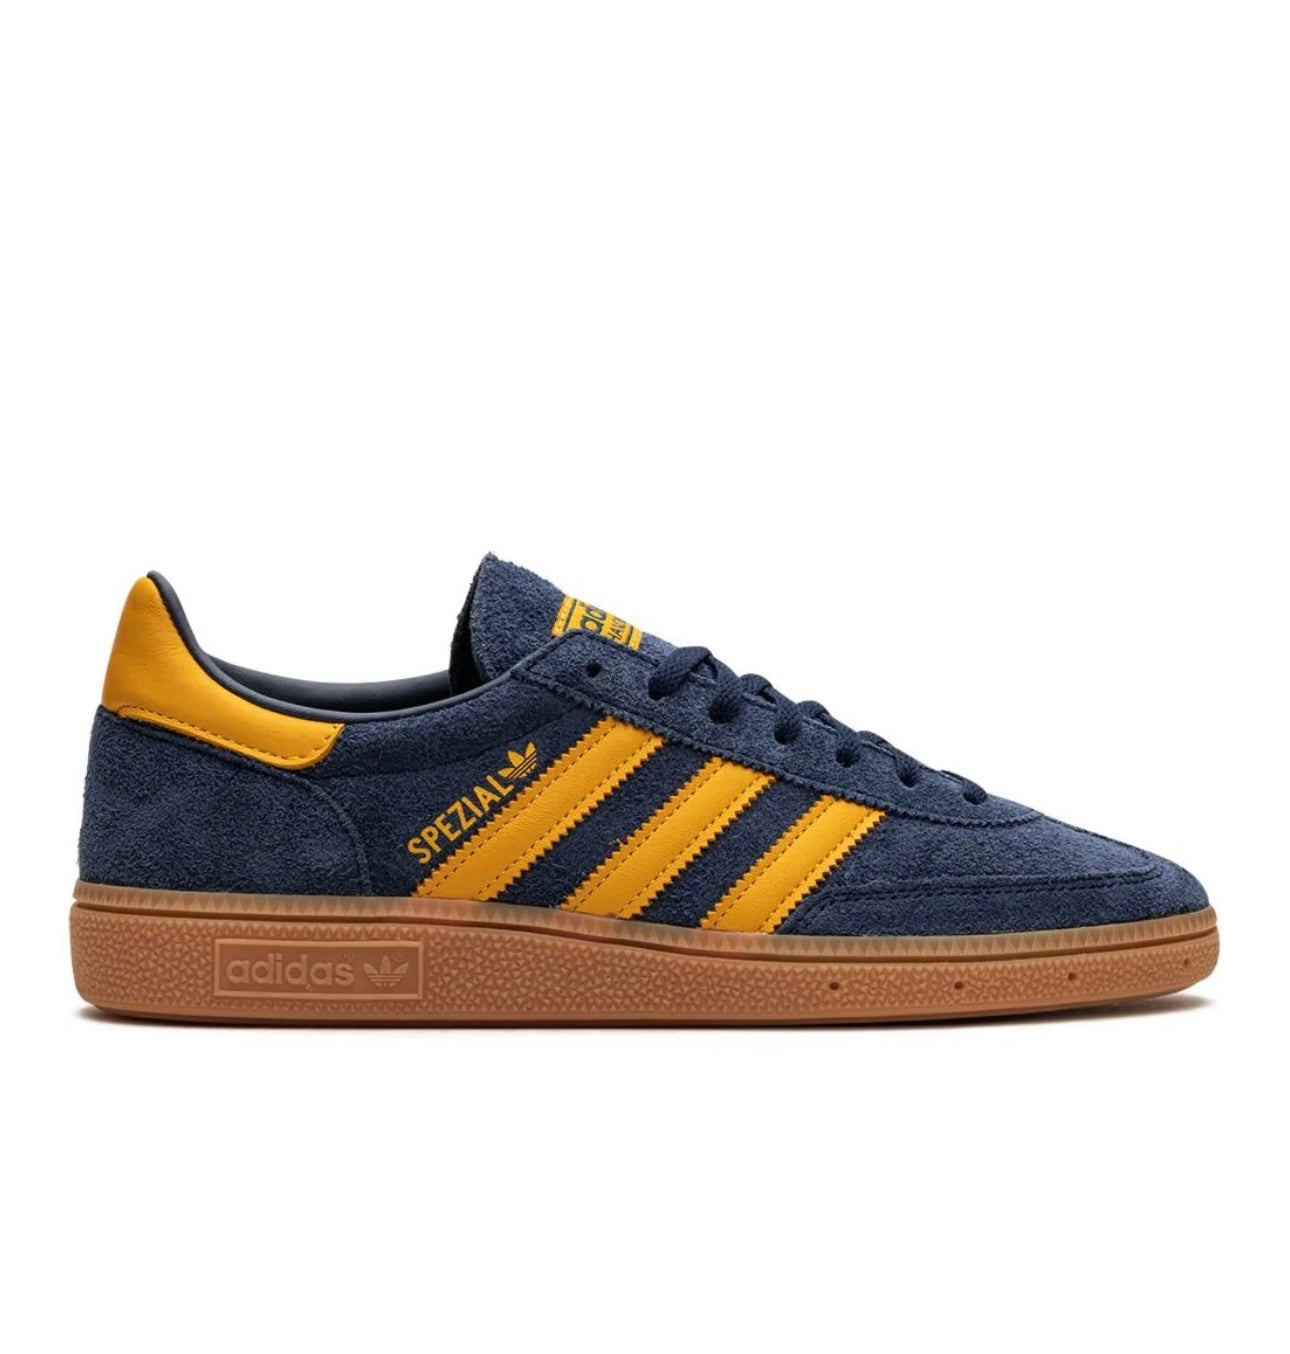 Adidas spezial yellow navy blue – Sneakersclub